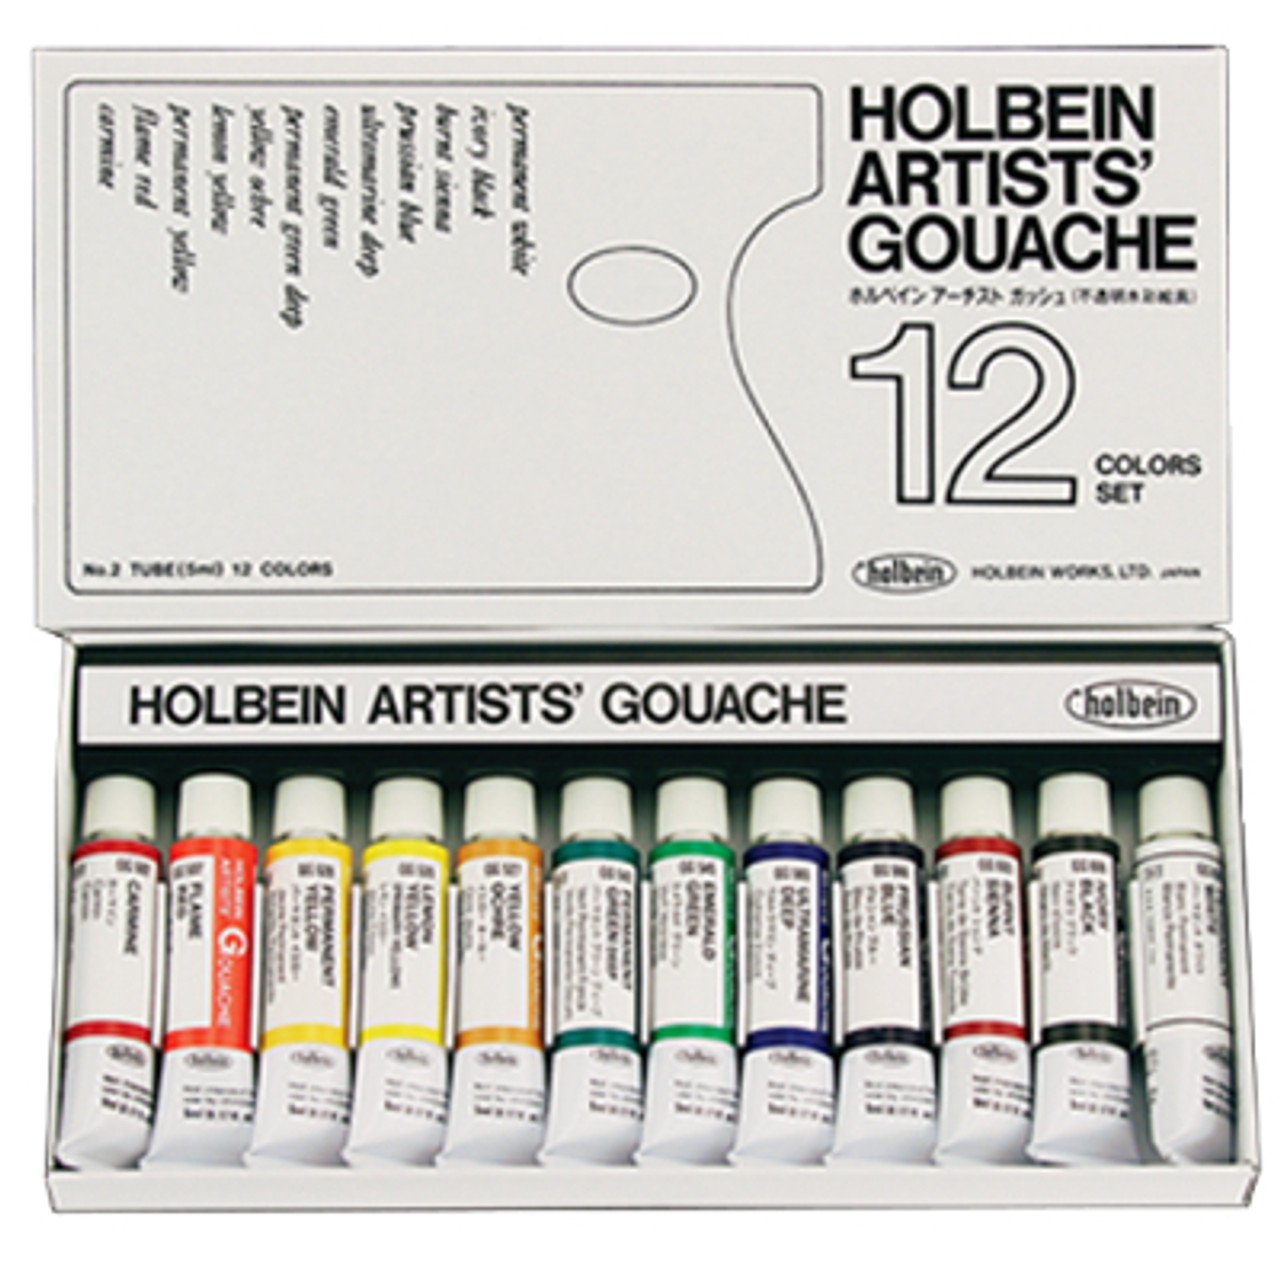 Holbein Artists' Gouache 18 Color Set 5ml